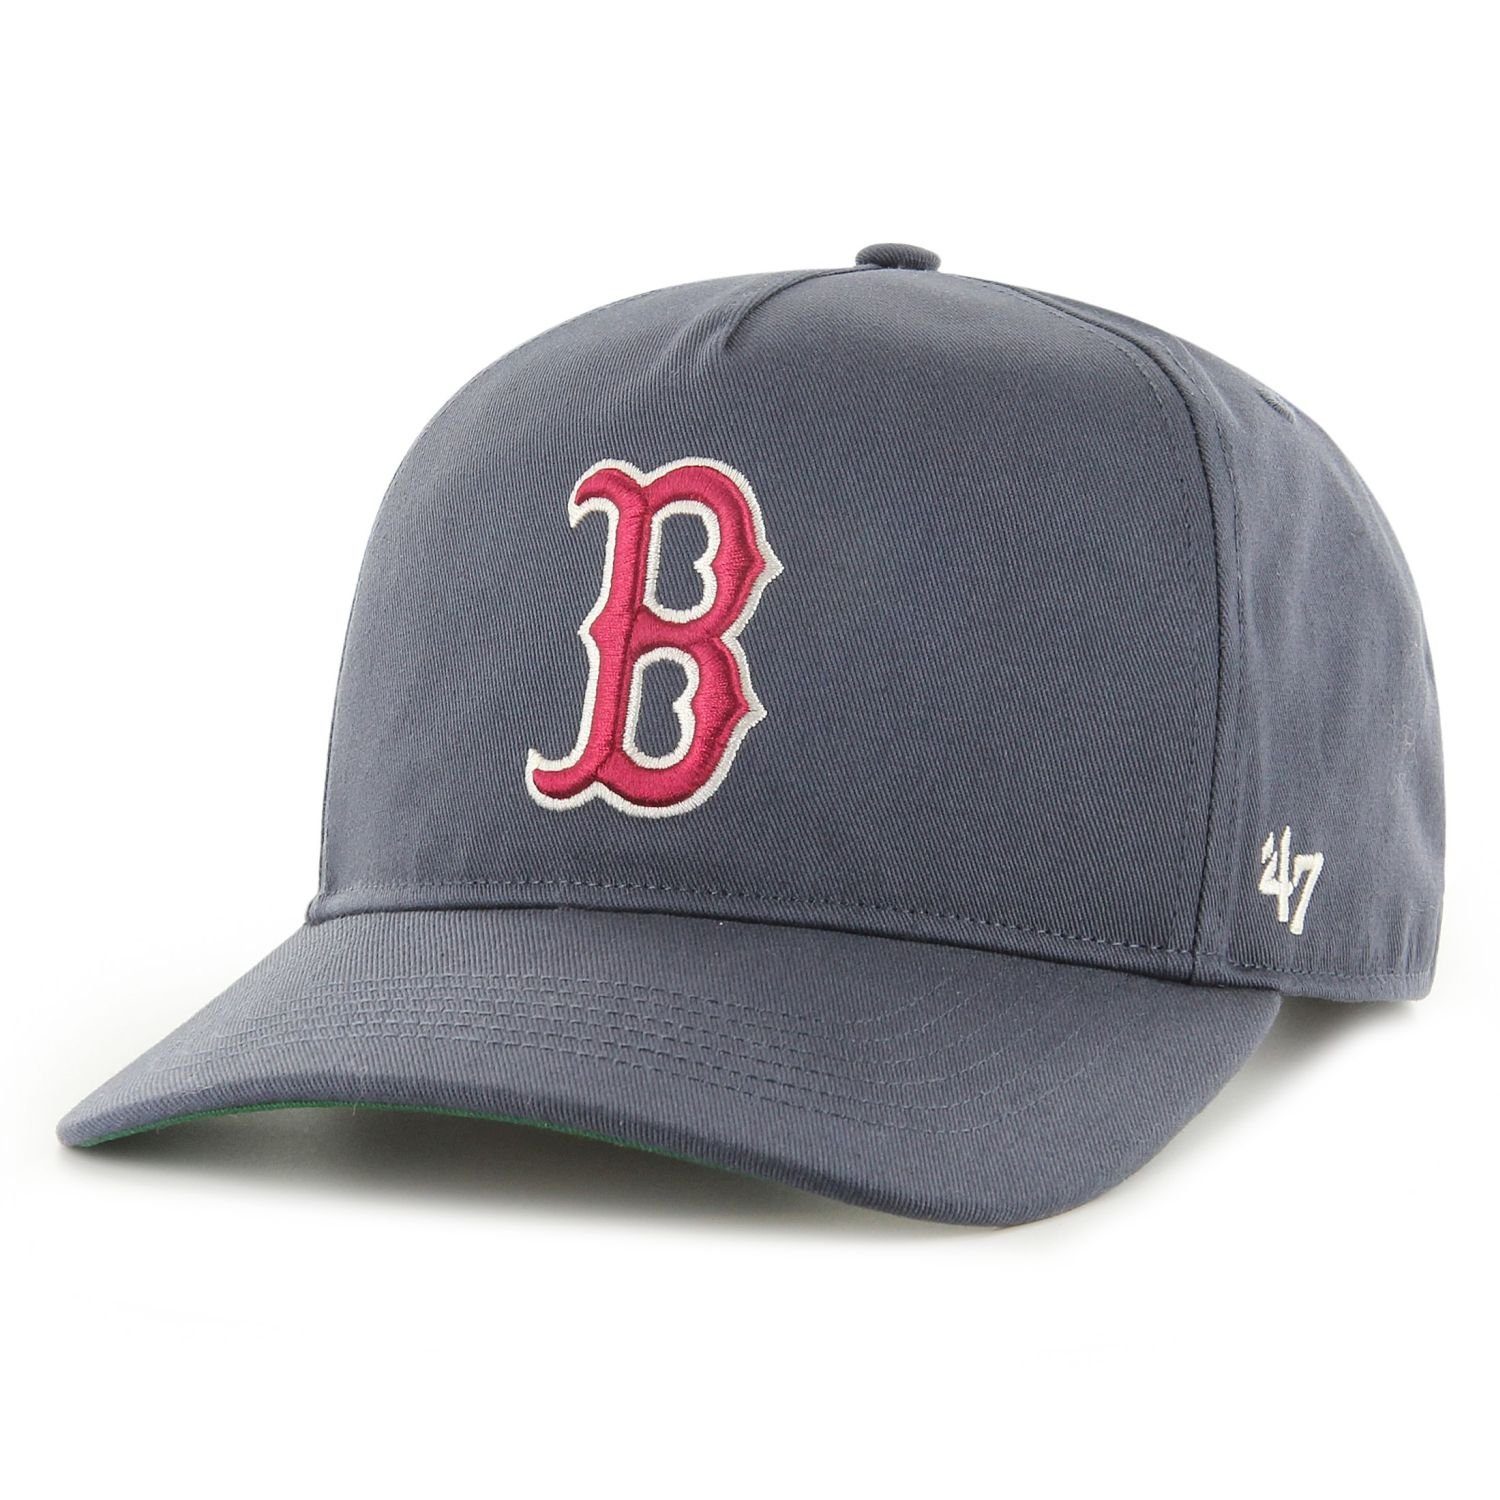 Boston '47 Sox Snapback Cap HITCH Brand Red